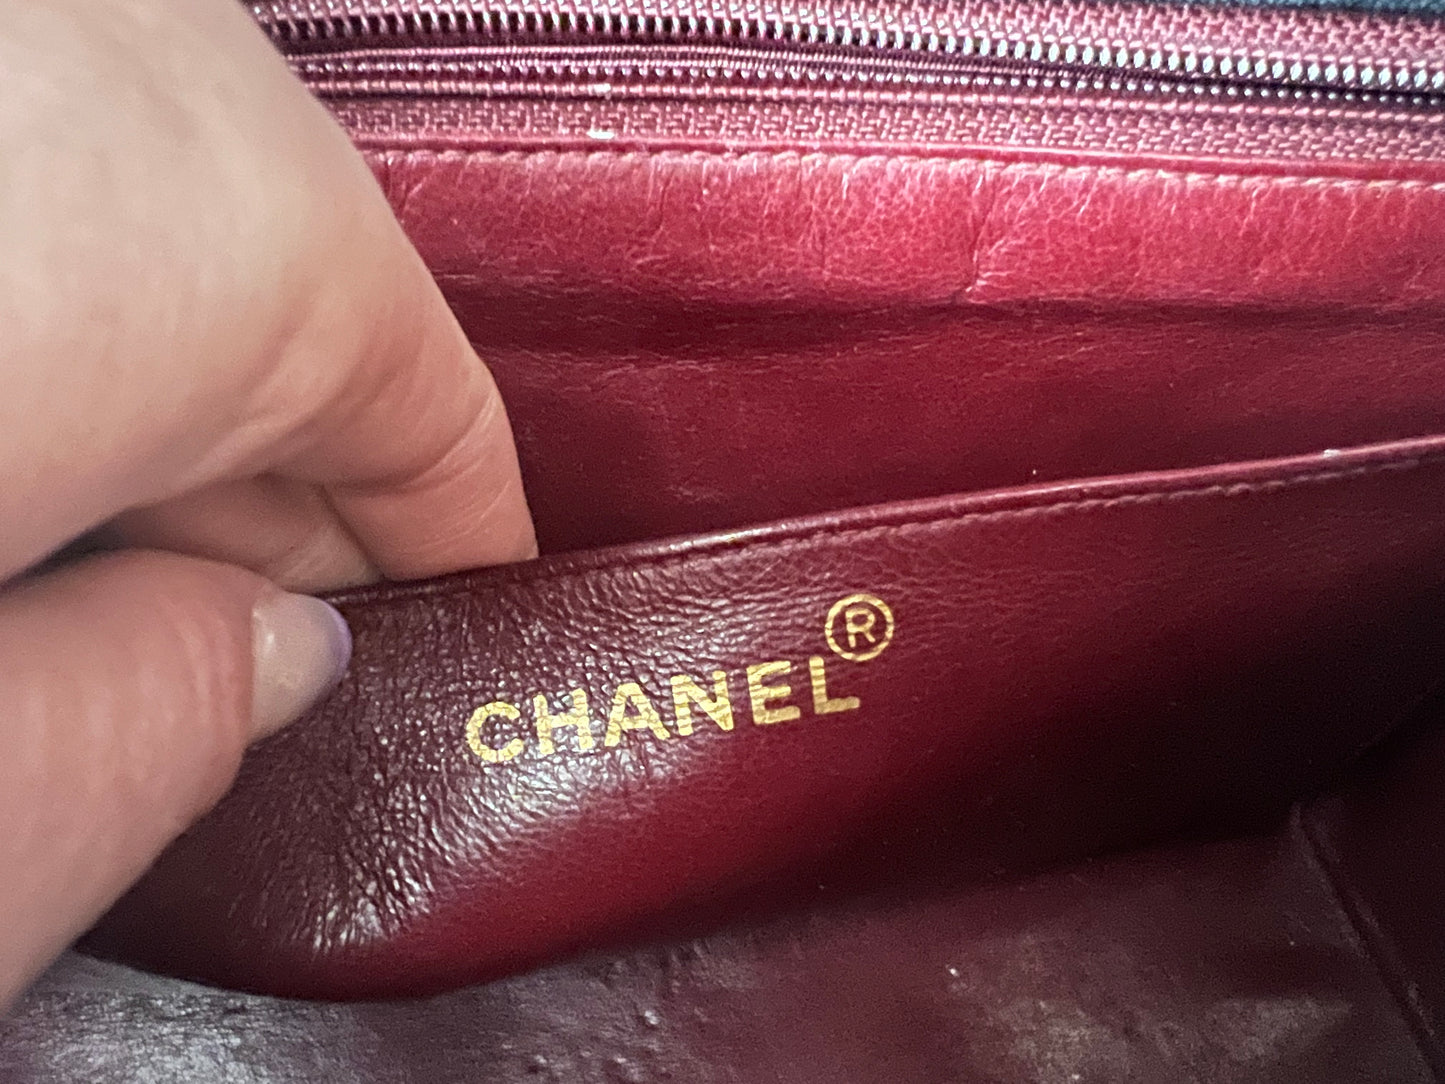 Chanel vintage CC lambskin covered messenger crossbody flap bag